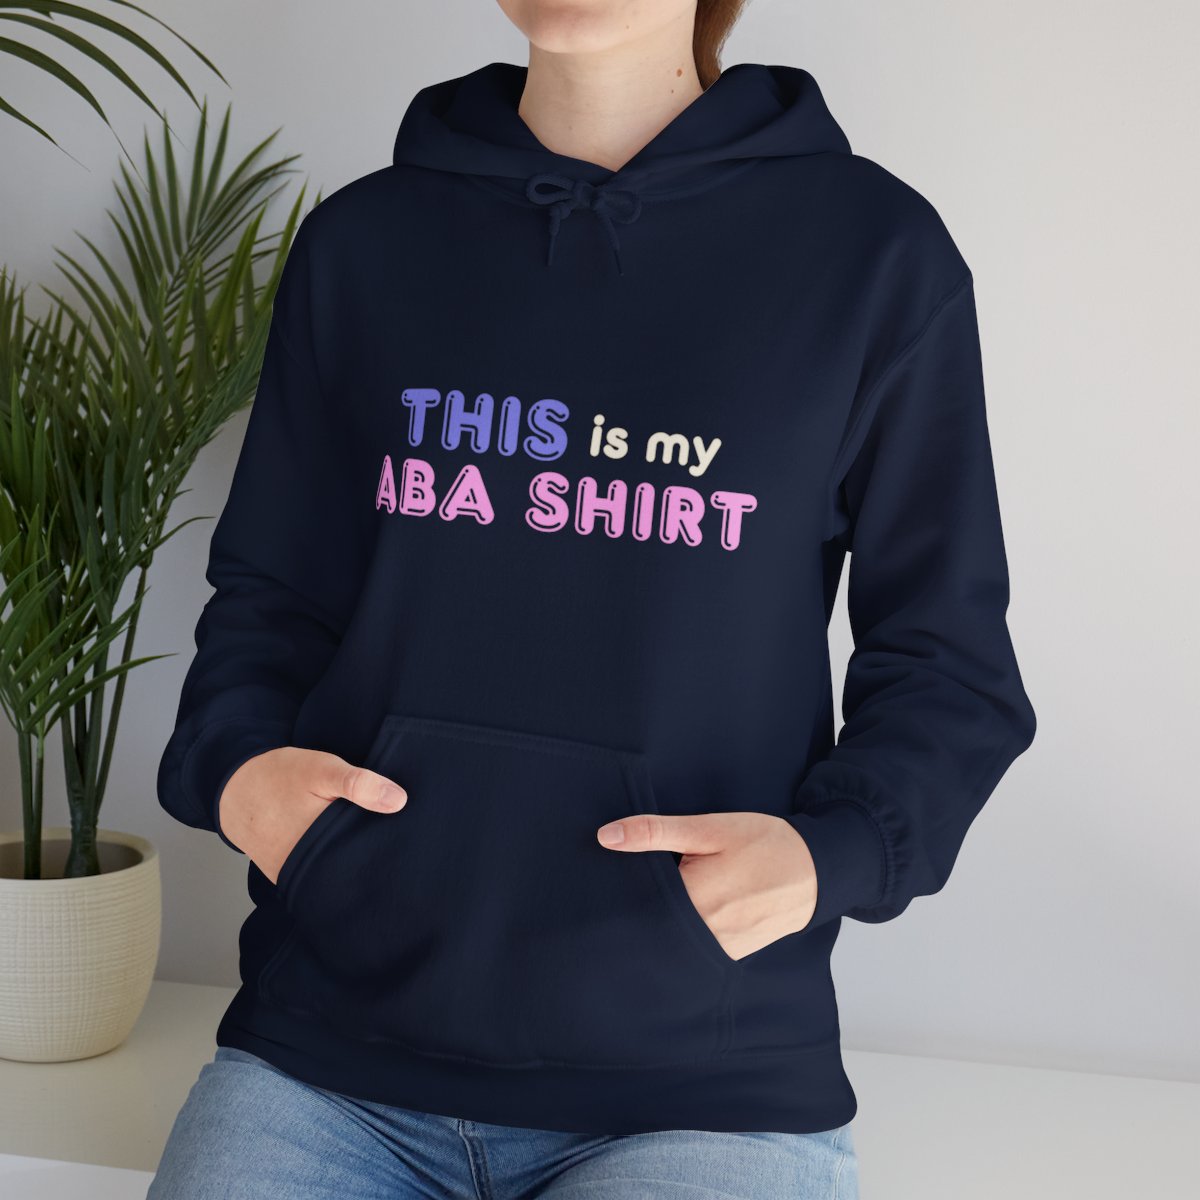 This is my ABA Shirt Sweatshirt - Adult product thumbnail image